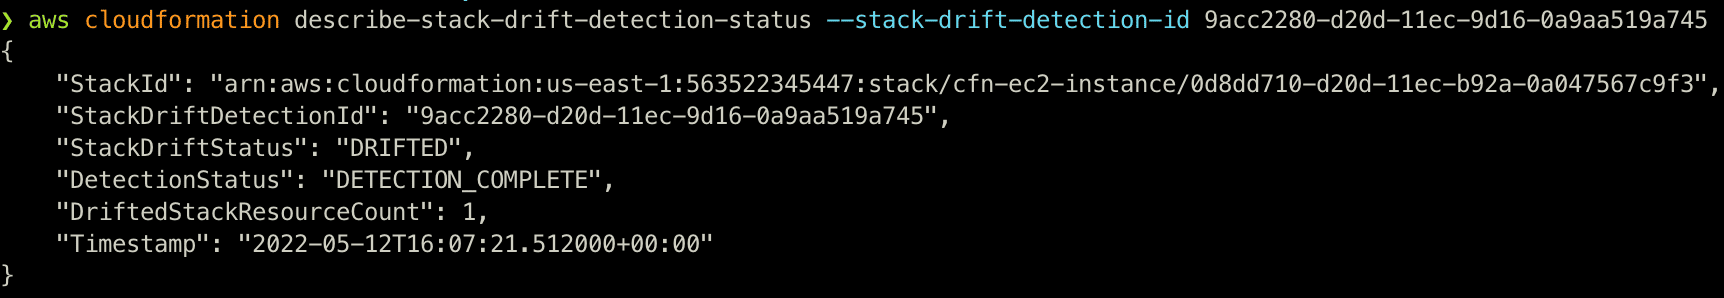 describe-steck-drift-detection-status